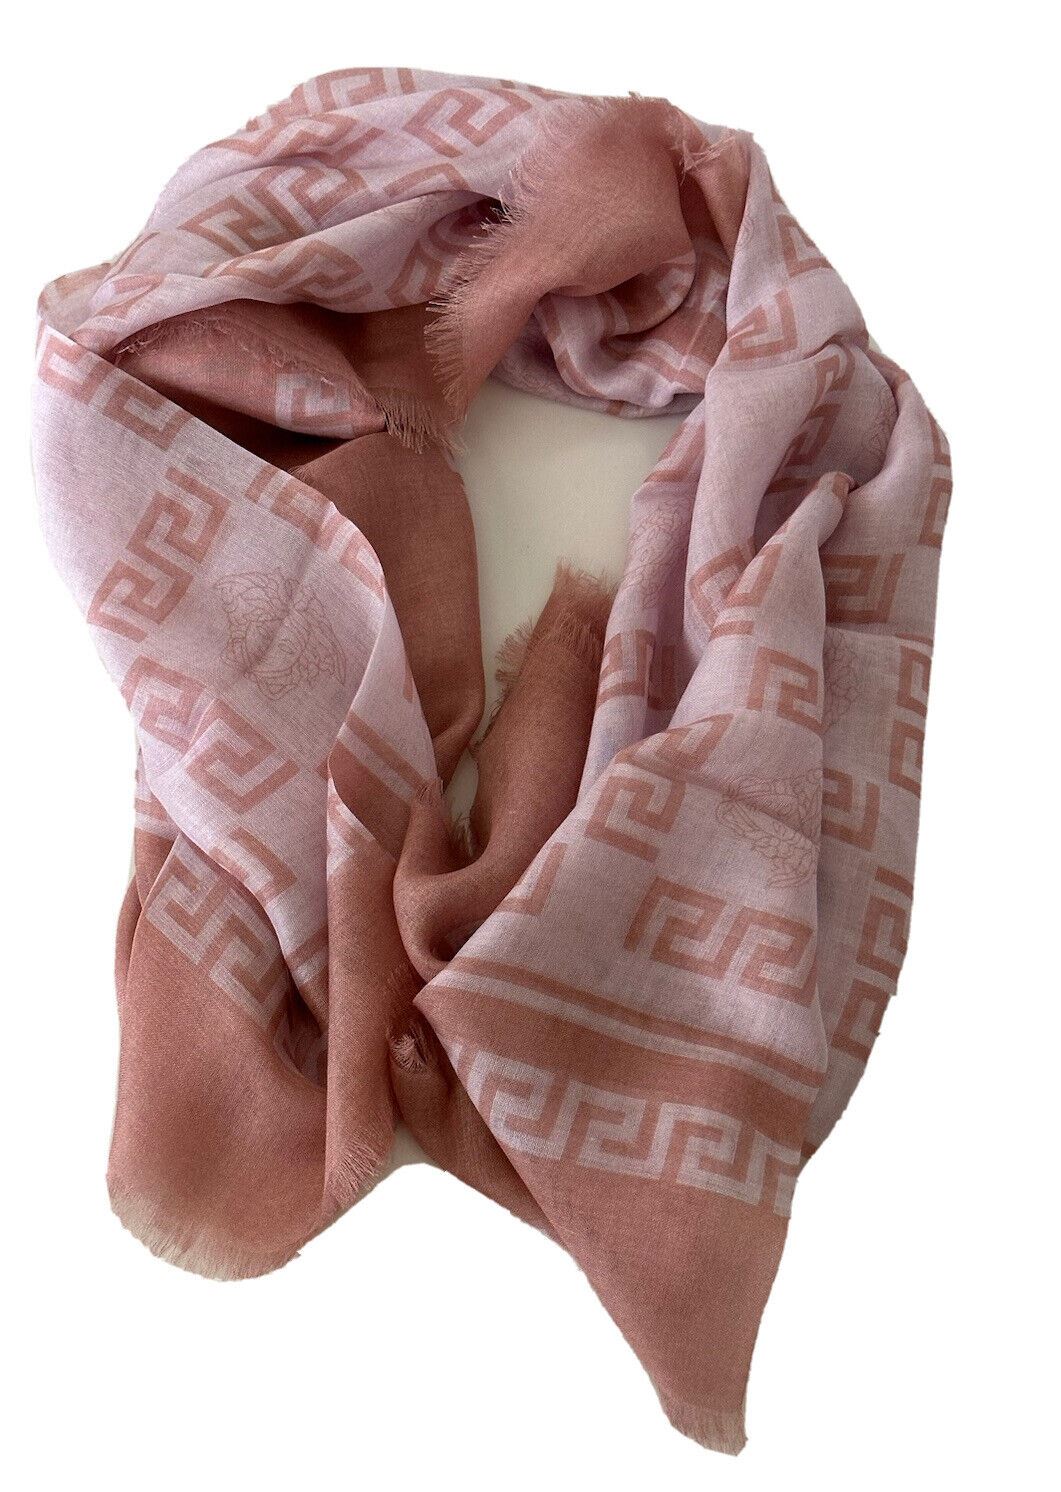 NWT $500 Versace Medusa / Greek Key Print Pink Scarf 52Wx52L IF01401S Italy